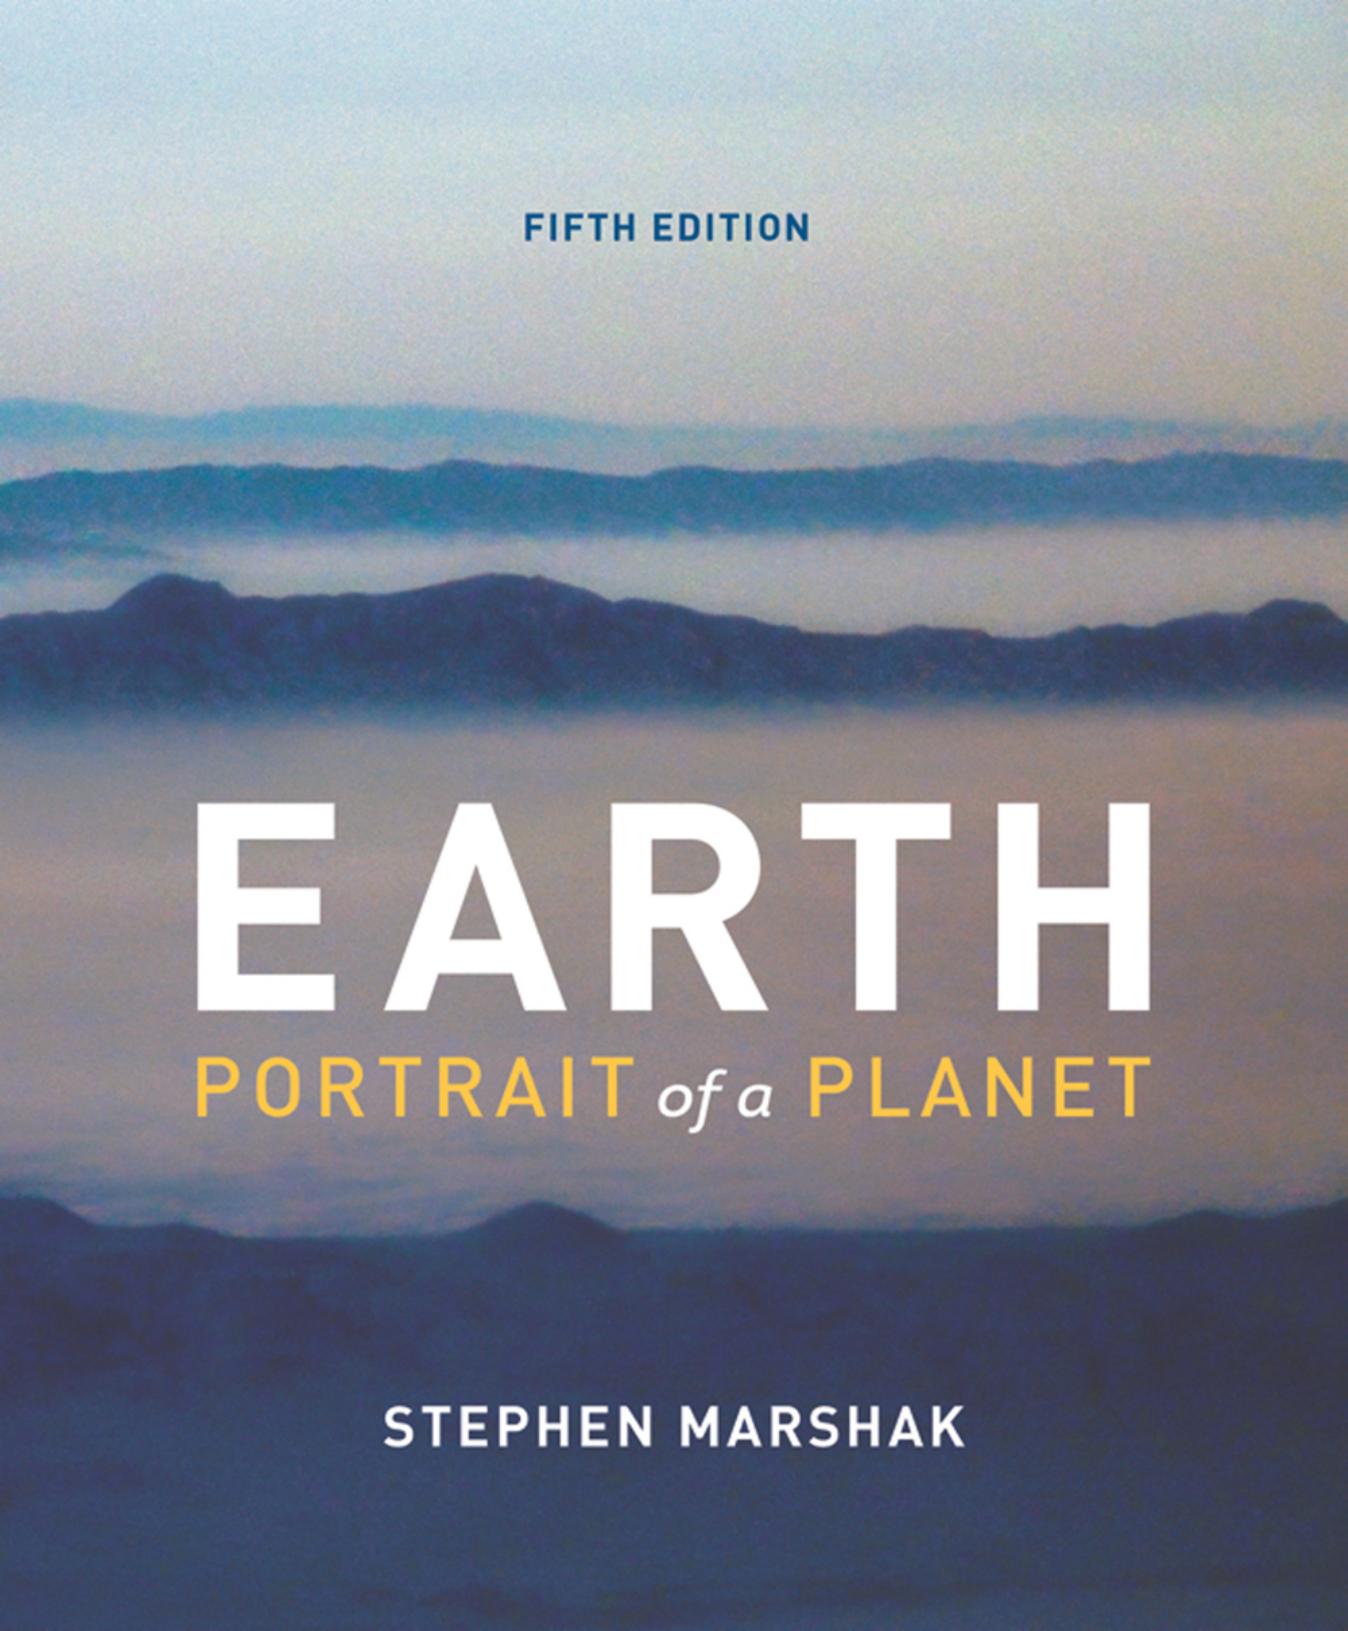 Earth_ Portrait of a Planet-Stephen Marshak.jpg